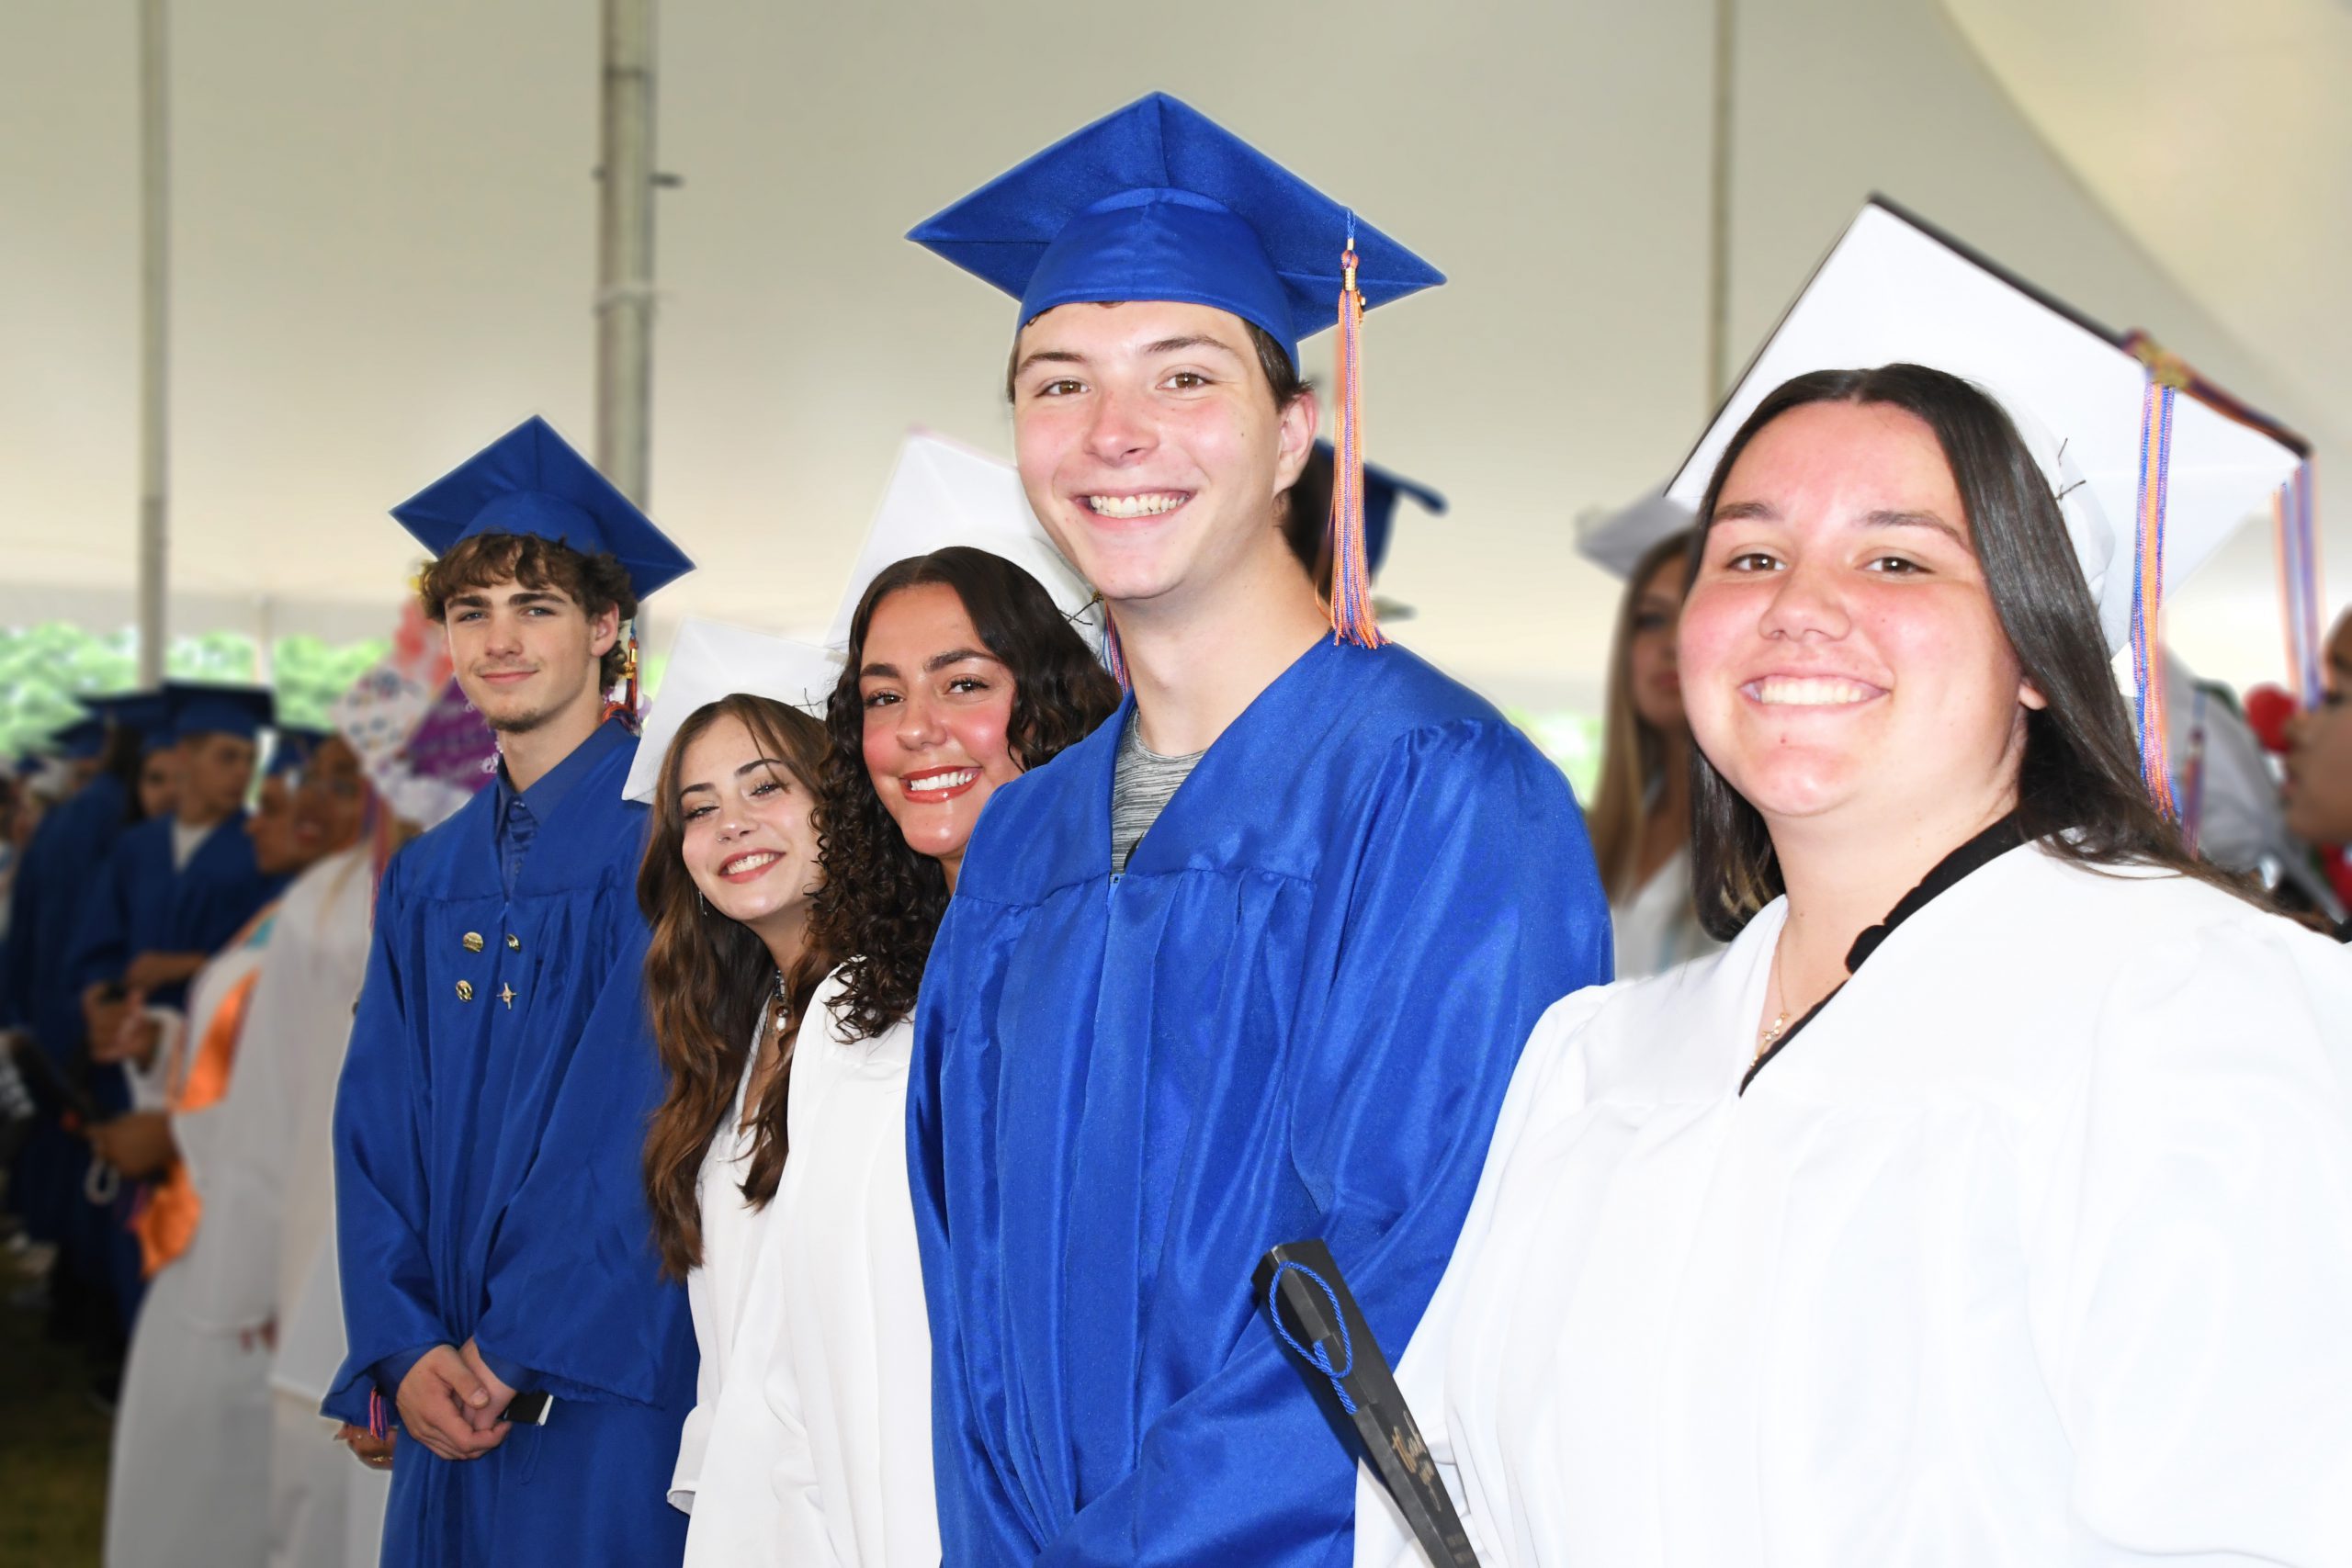 Students process into graduation